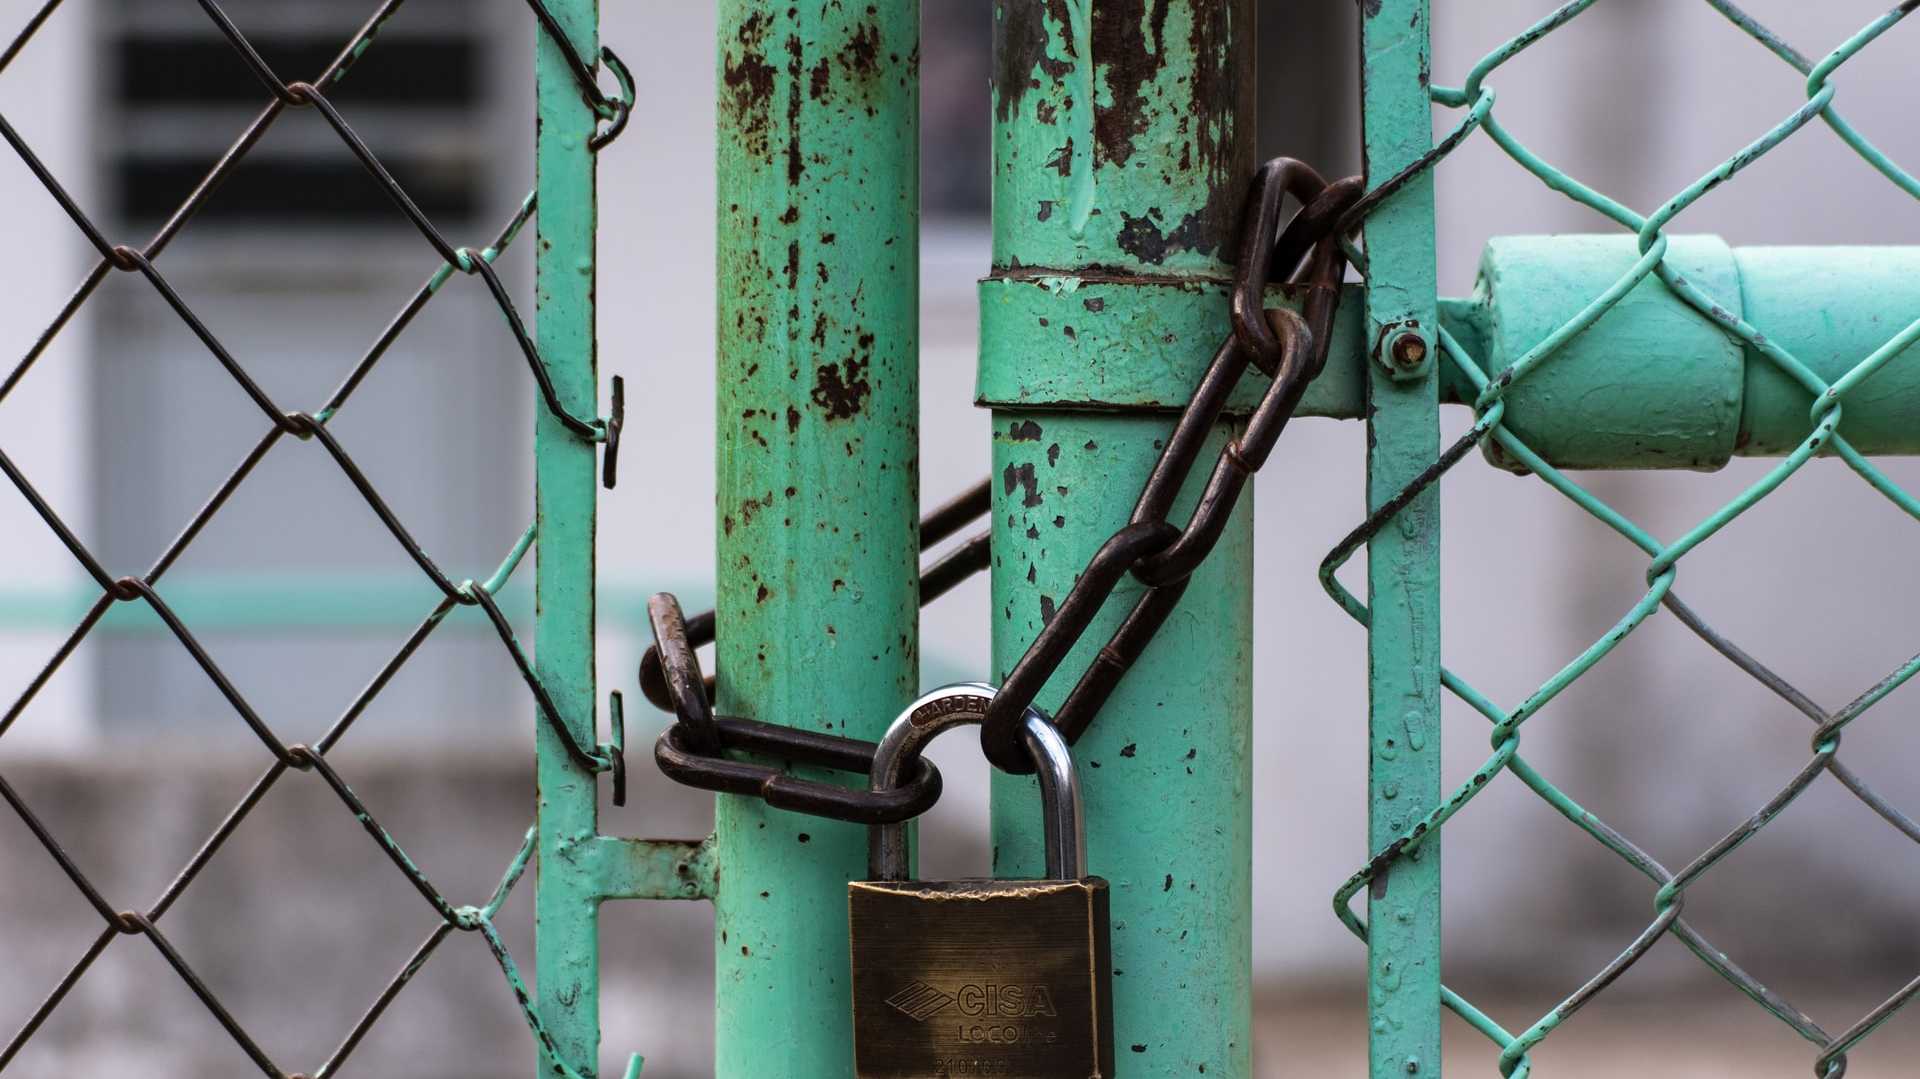 Padlock securing a chain on an aqua-coloured fence